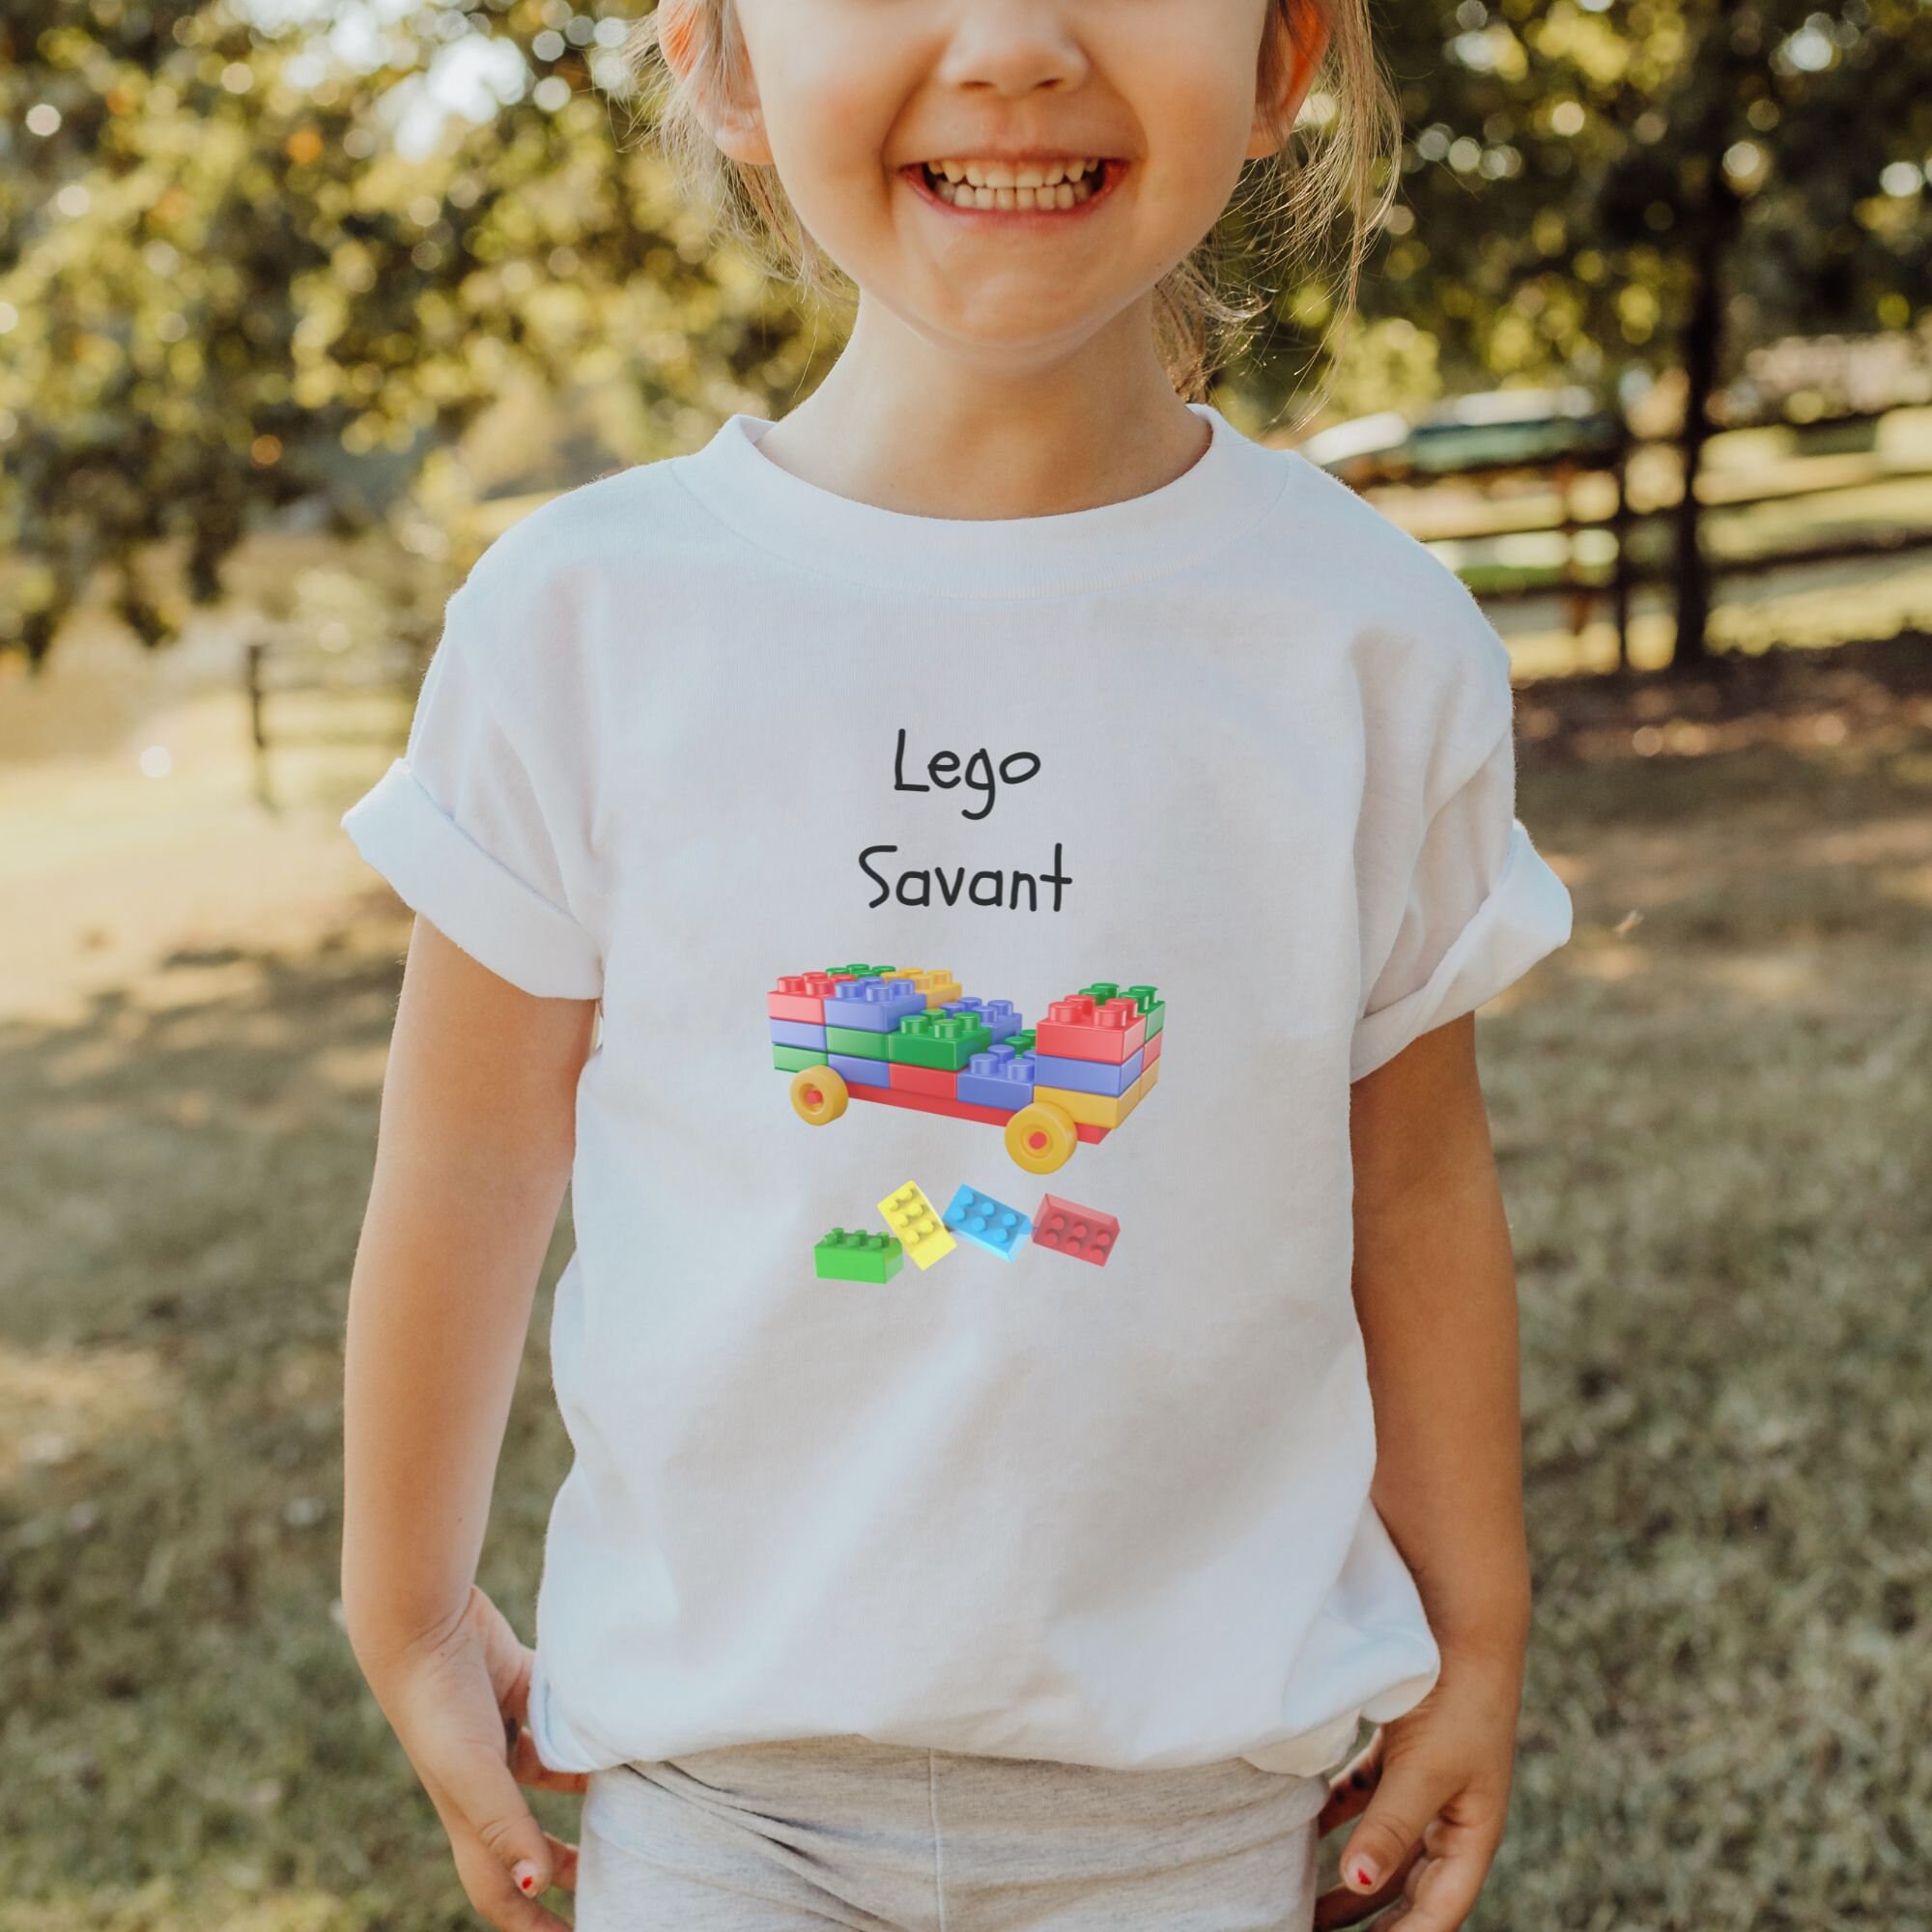 Kids Shirt for Funny Tshirt Gift for Boy Toddler T-shirt Gift Etsy